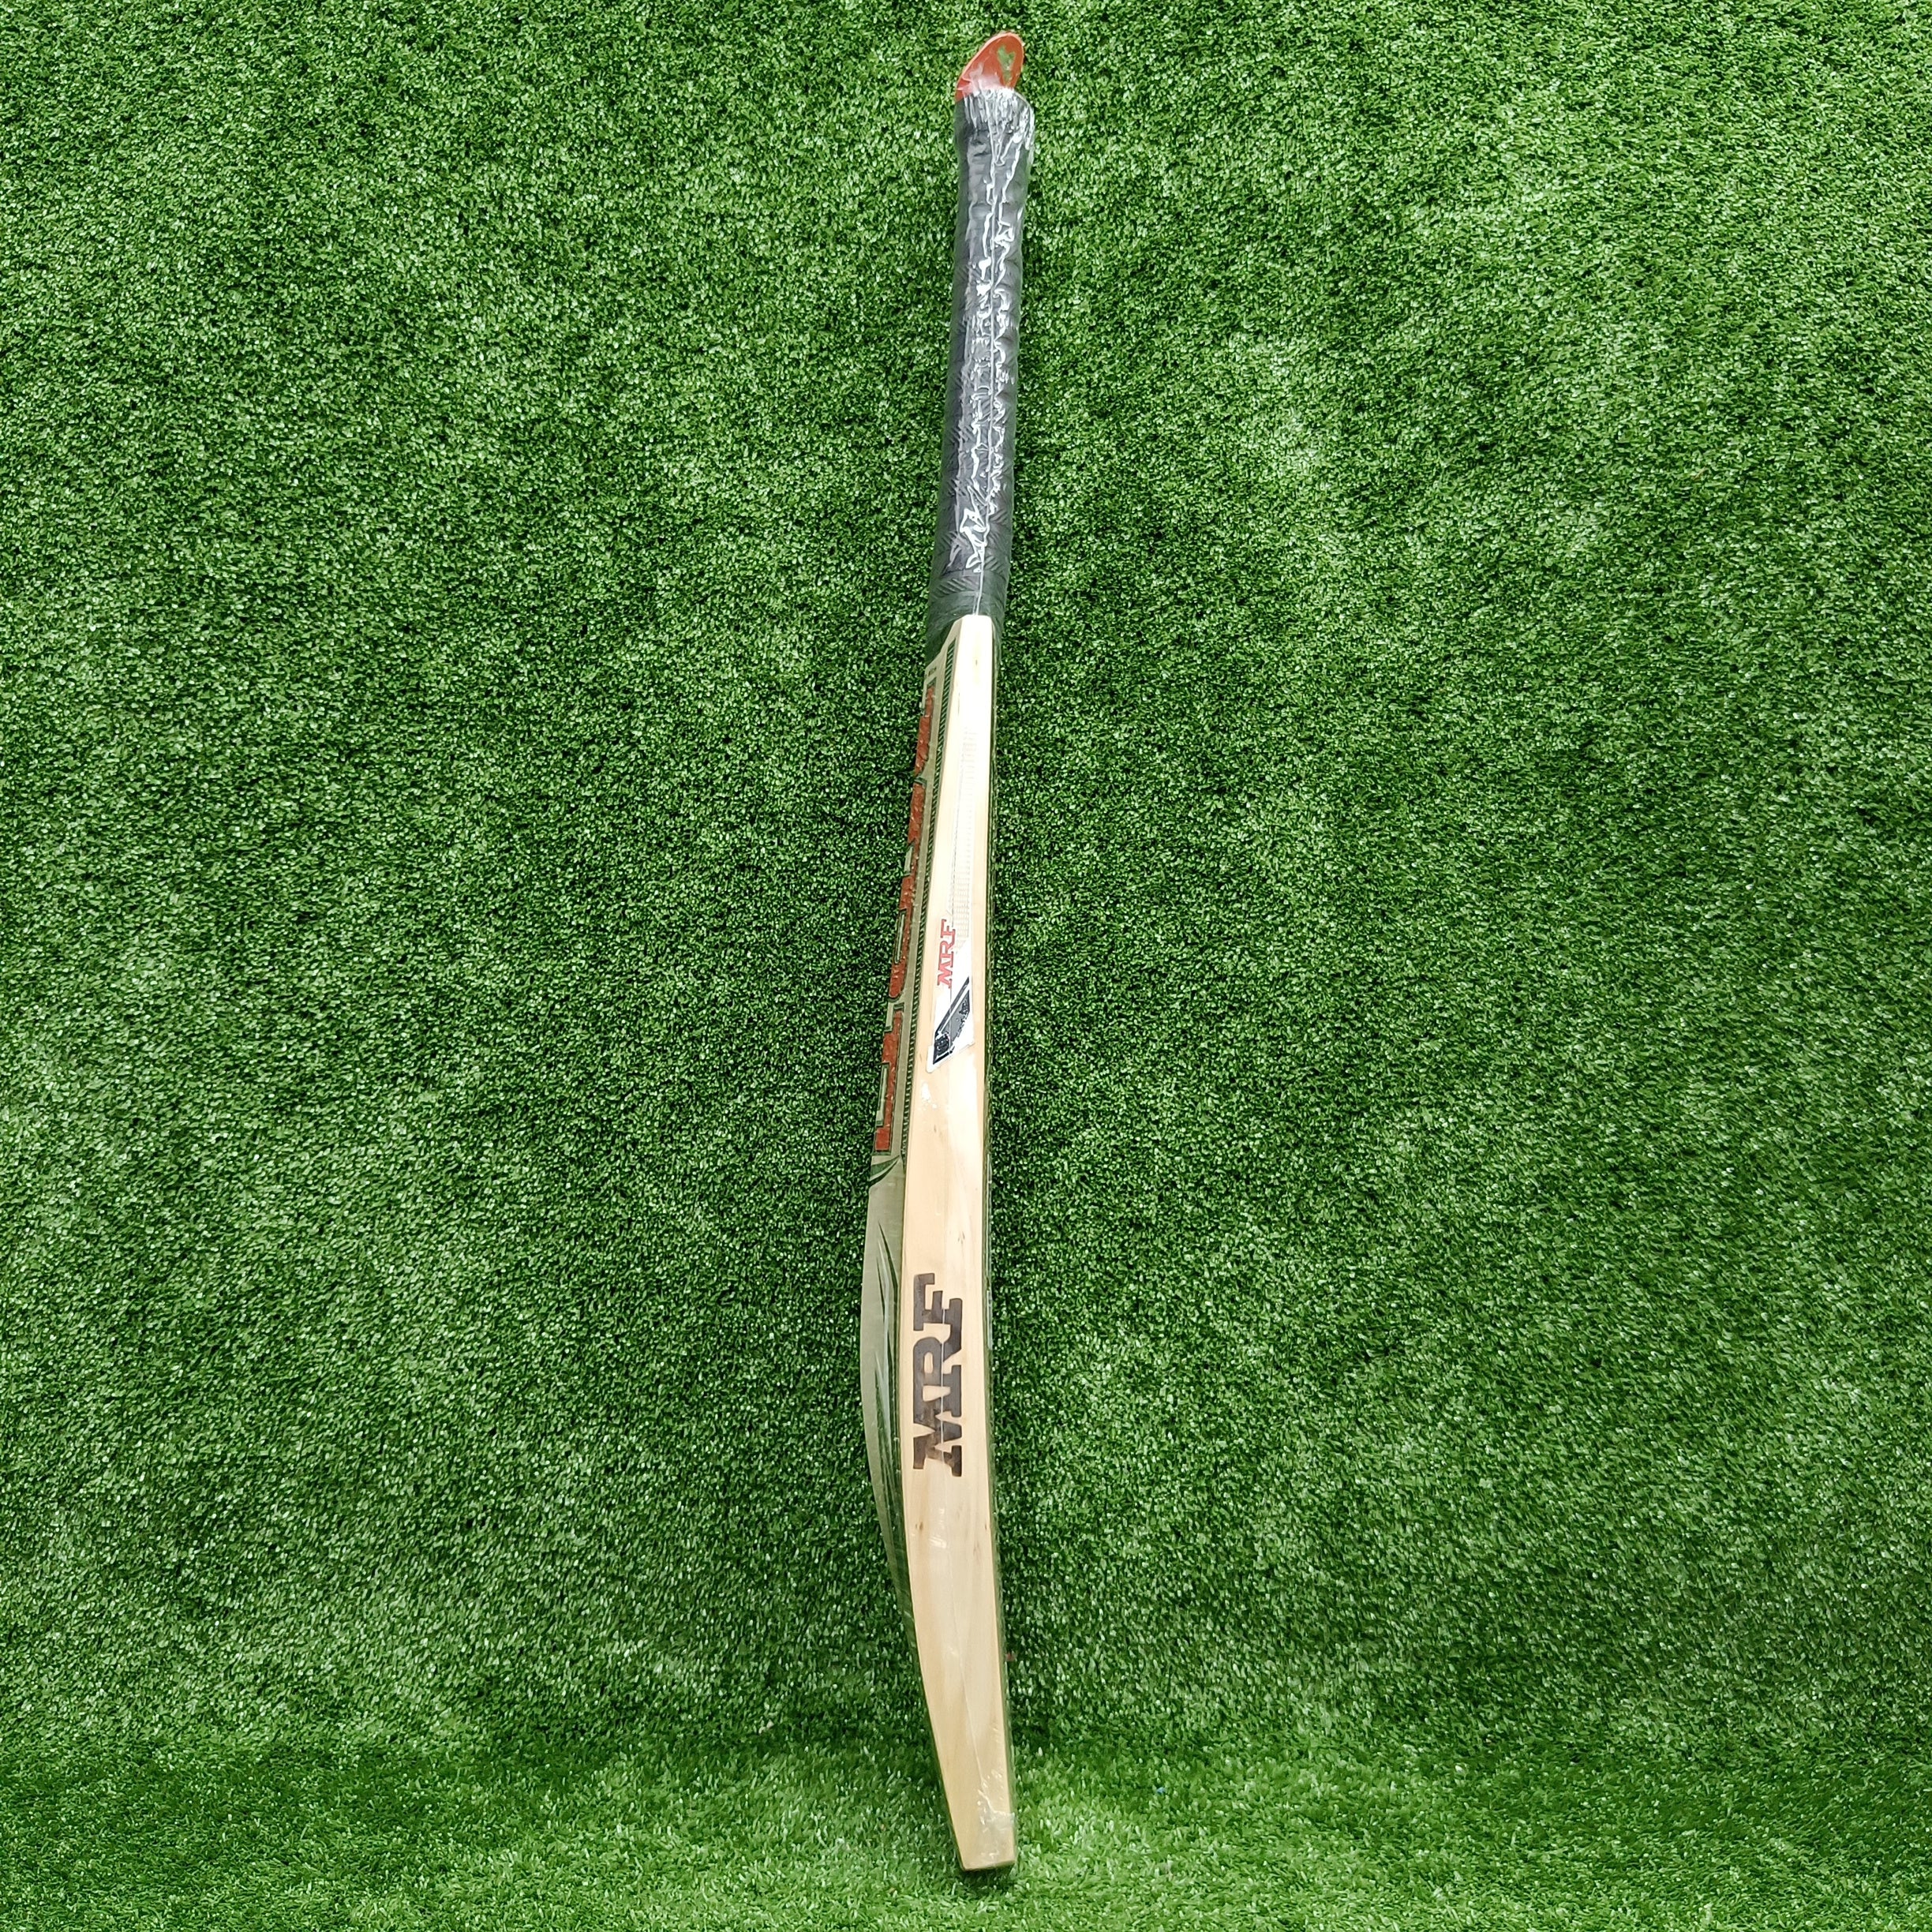 MRF Legend VK 18 200 Cricket Bat